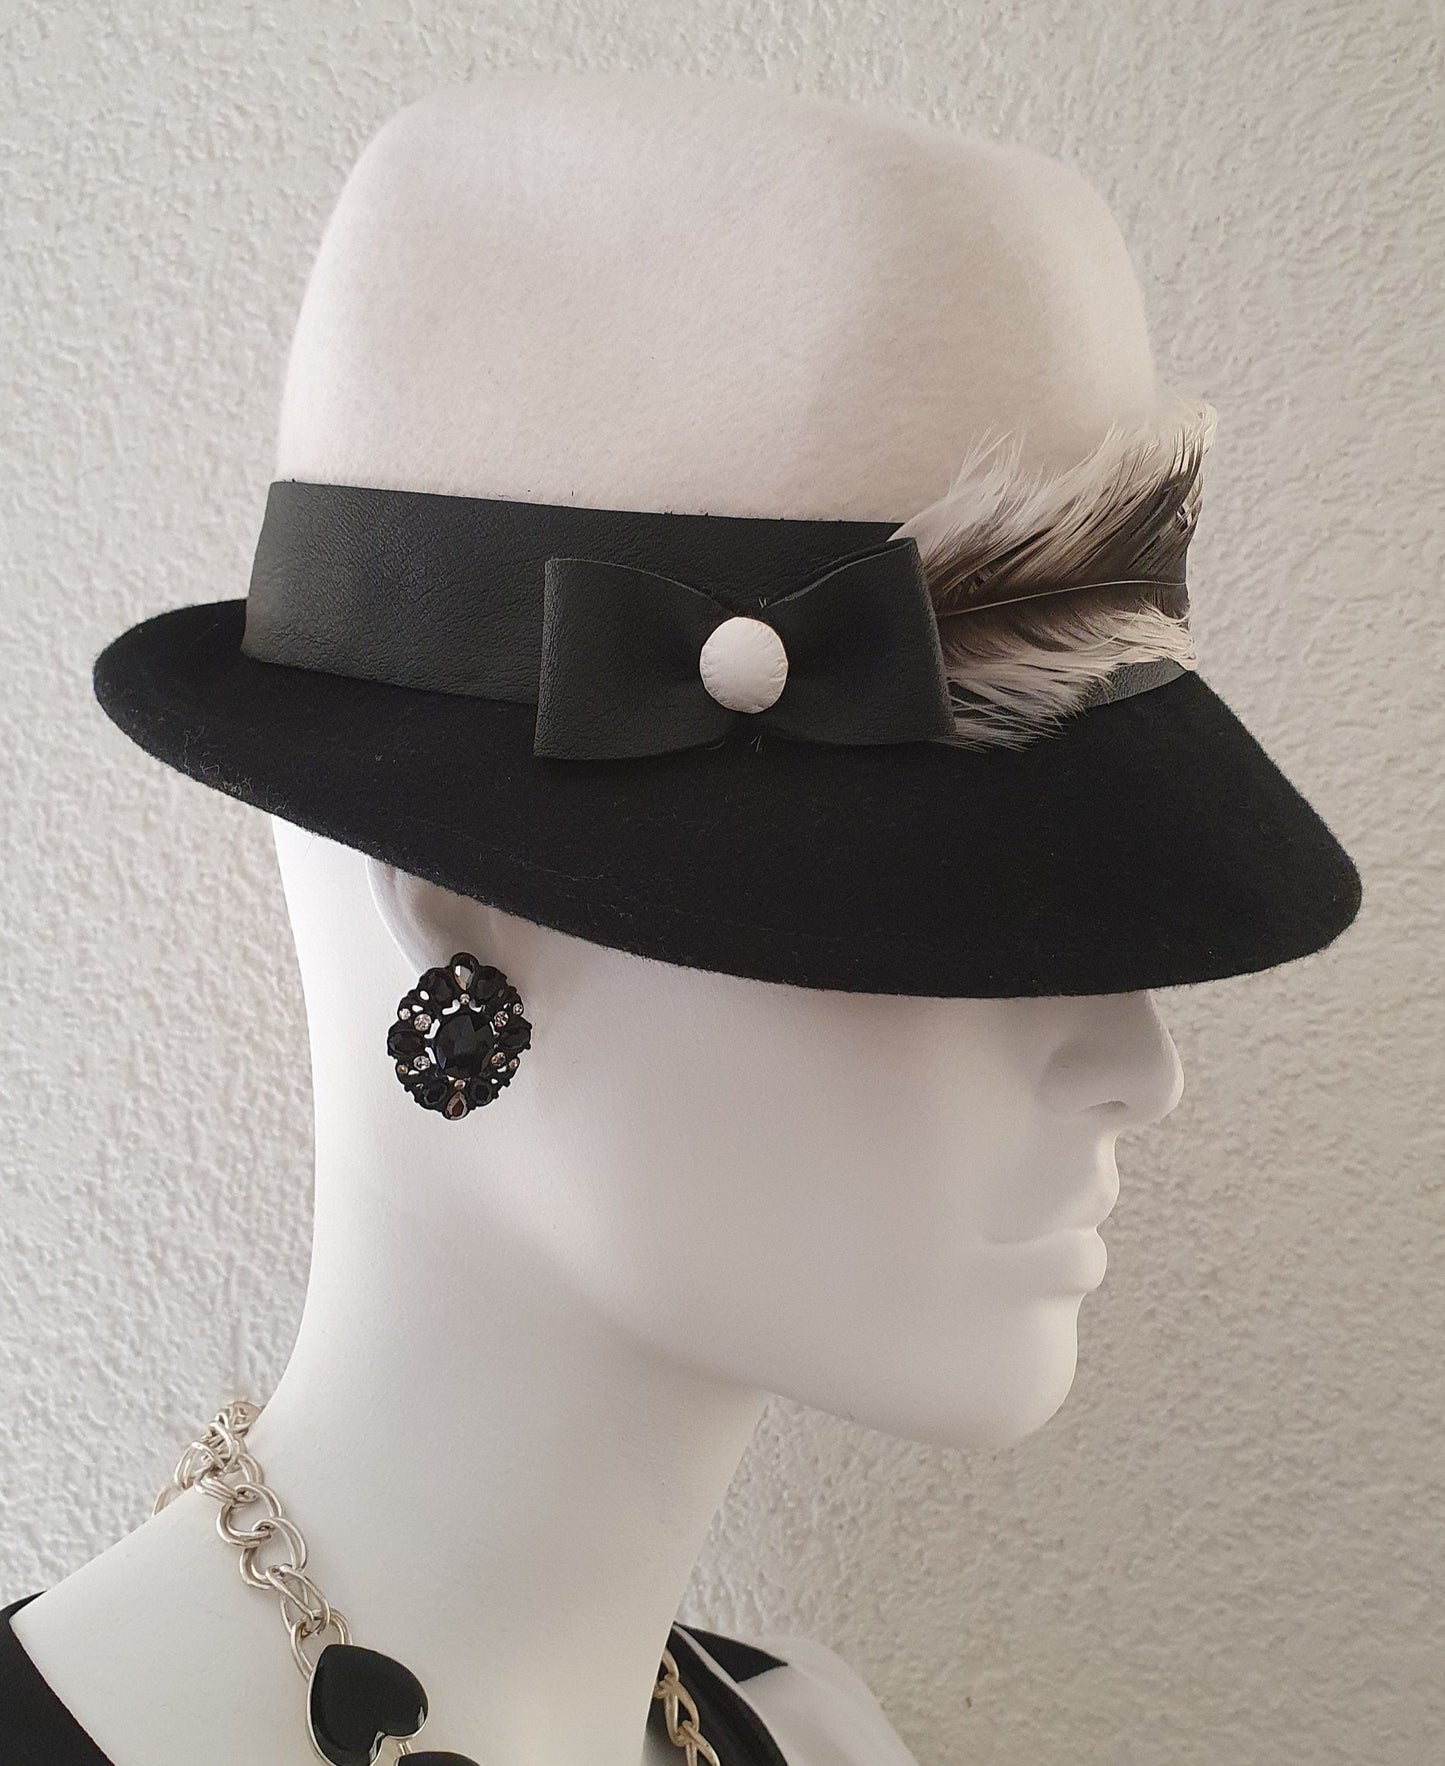 Elegant women's hat black and white felt hat fedora- stylish fascinator, felt hat, headpiece